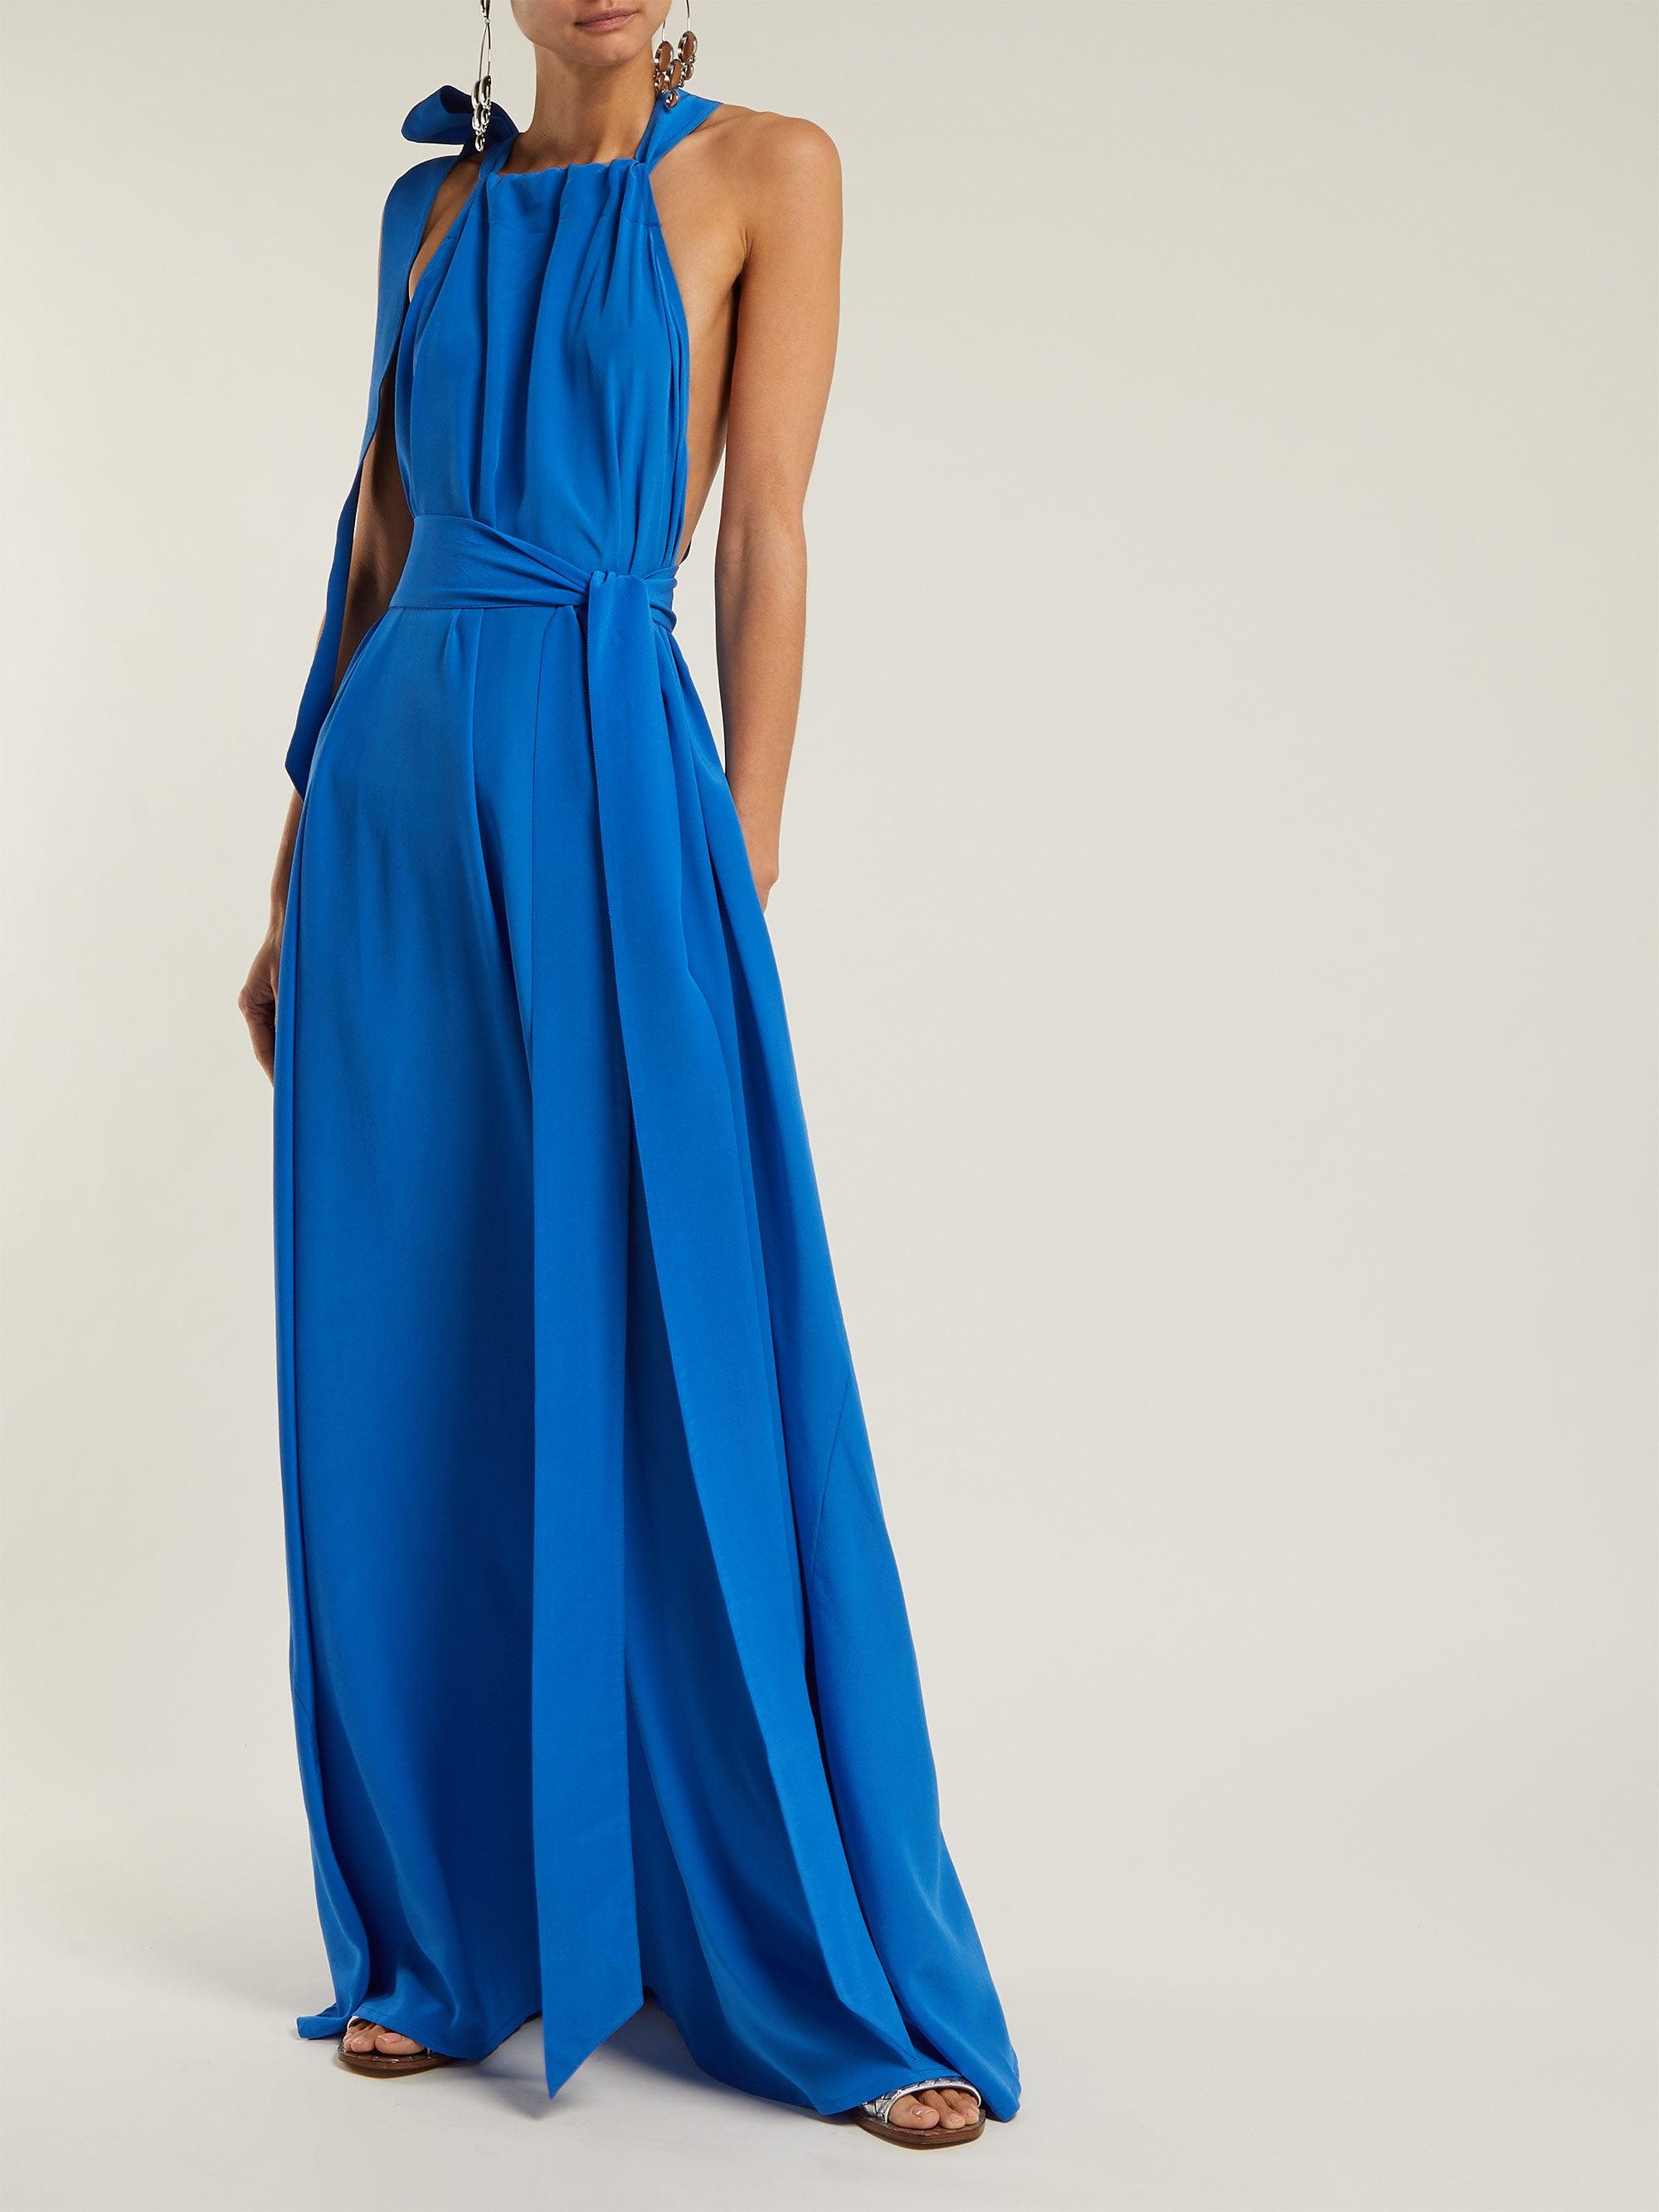 Kalita Camille Gathered Silk Maxi Dress in Blue - Lyst